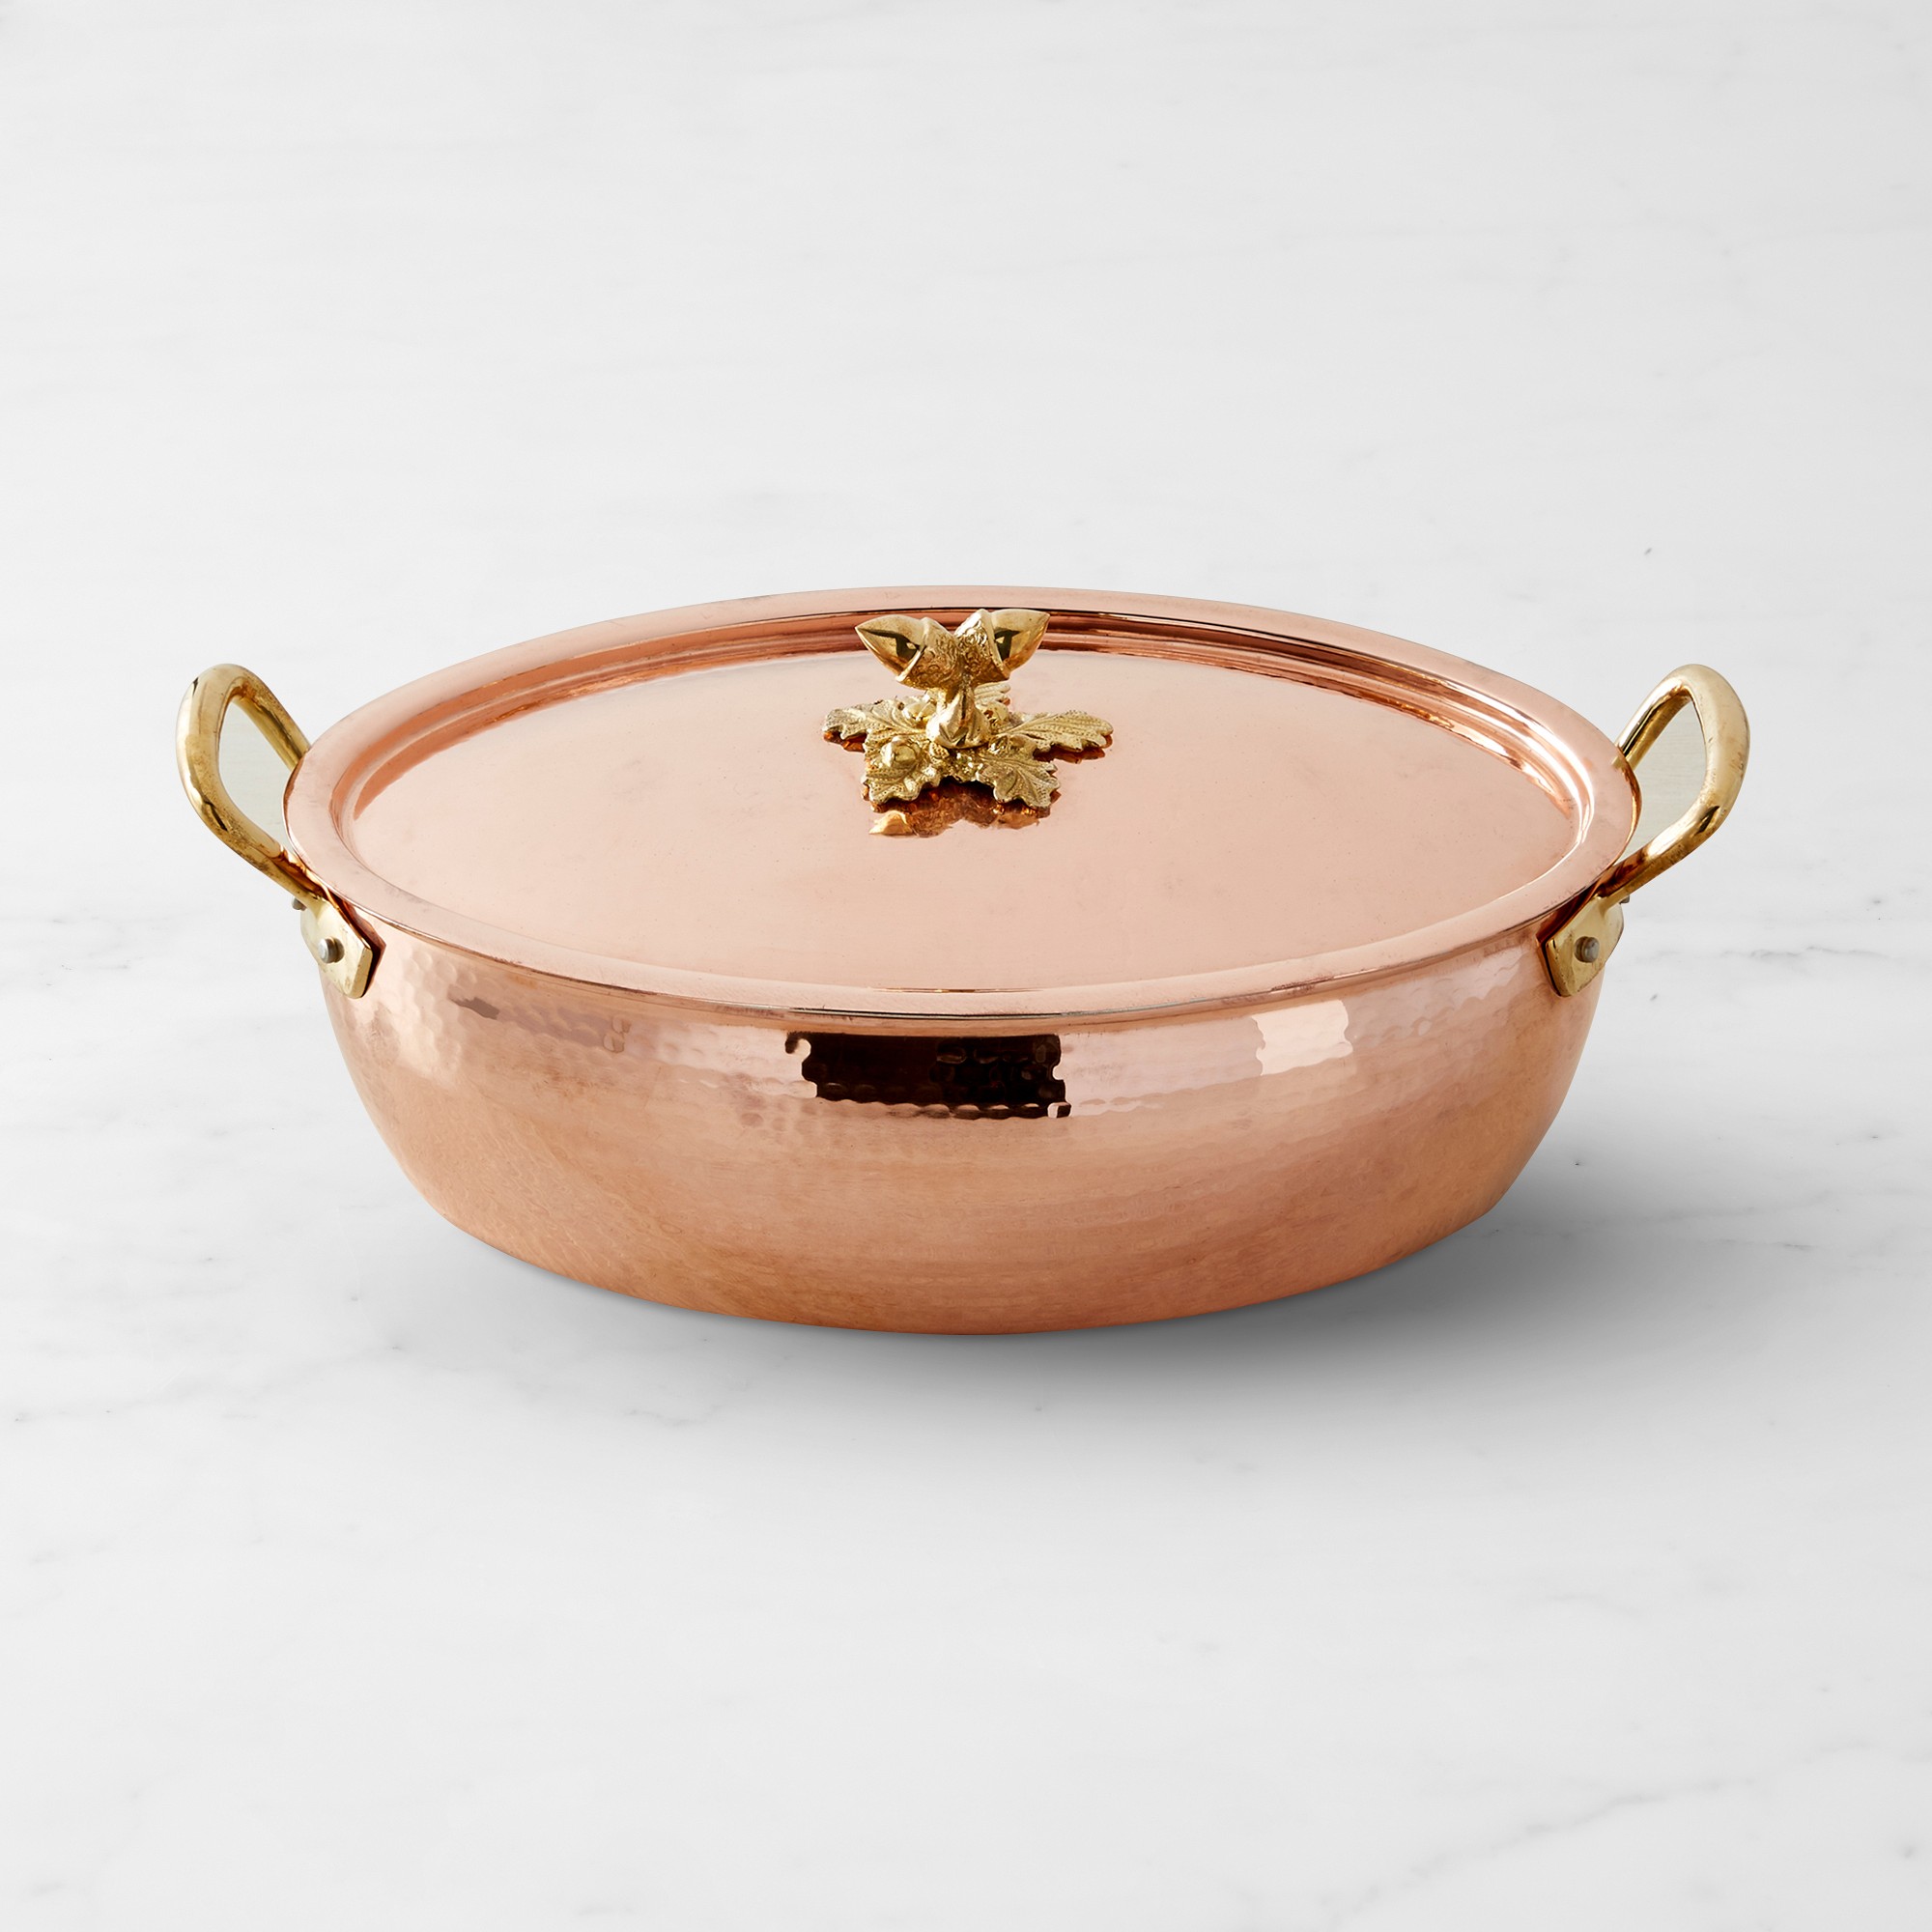 Ruffoni Historia Hammered Copper Oval Roasting Pan with Acorn Knob, 7 3/4-Qt.